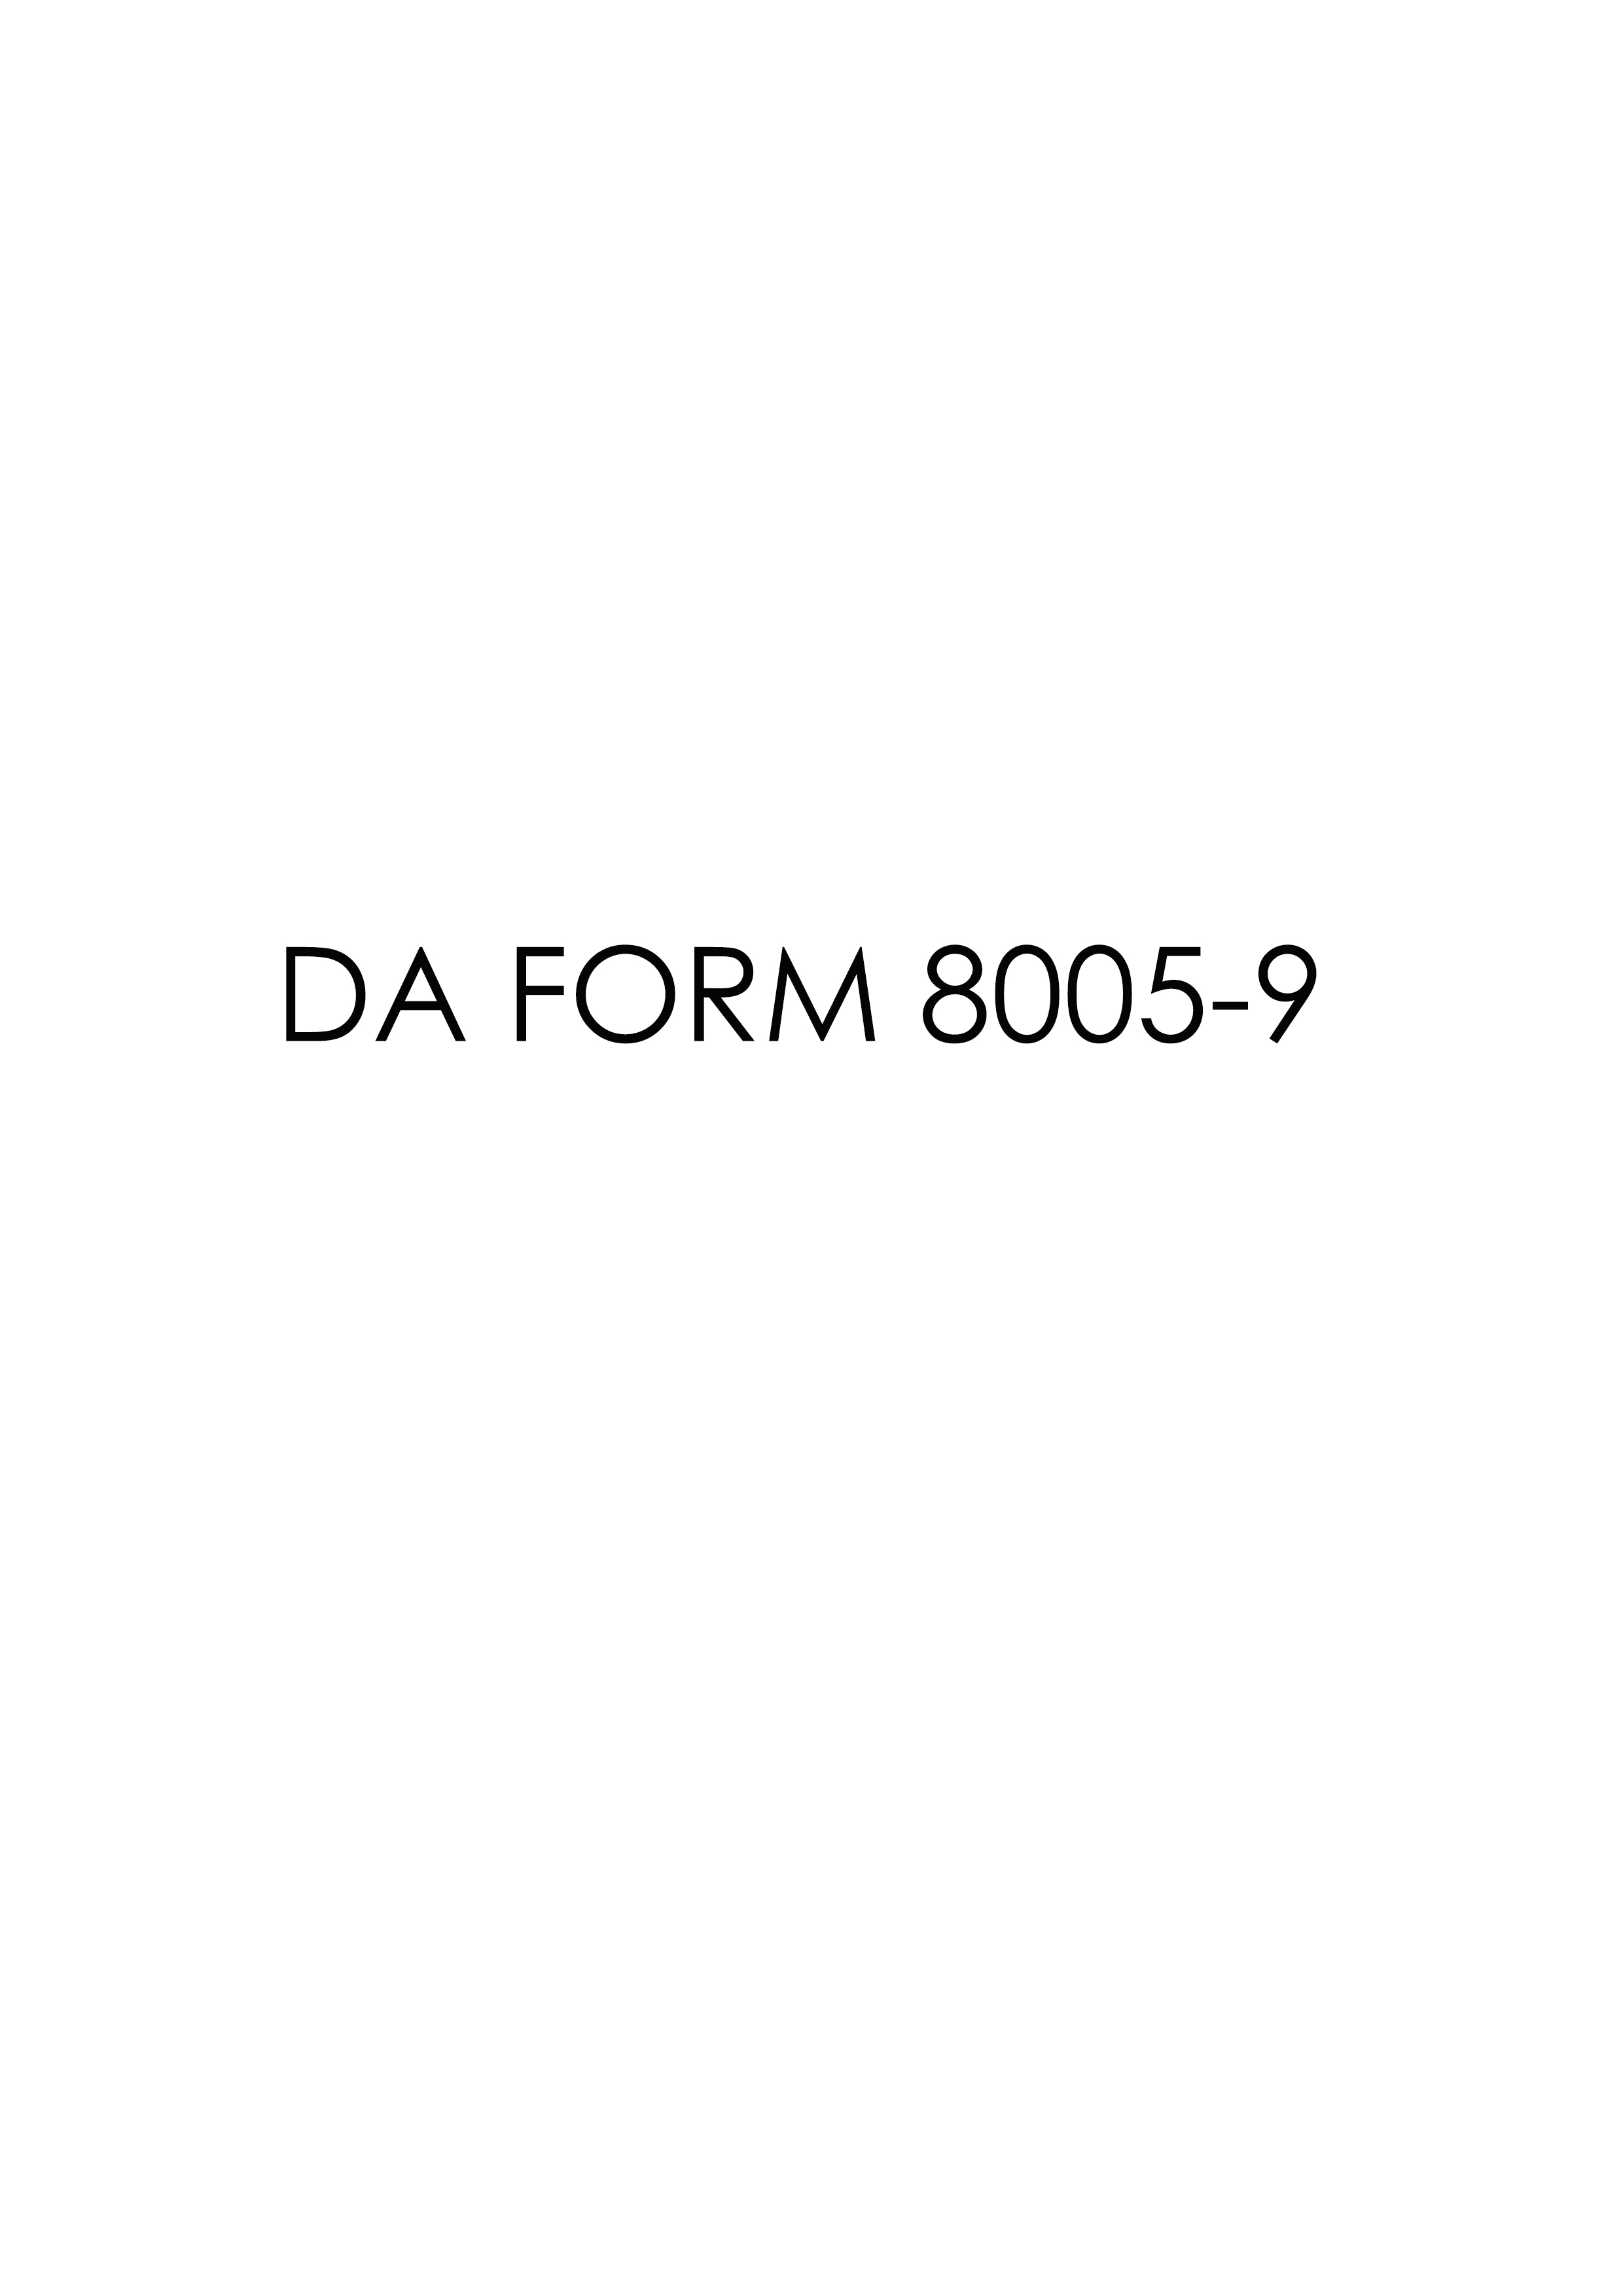 Download da form 8005-9